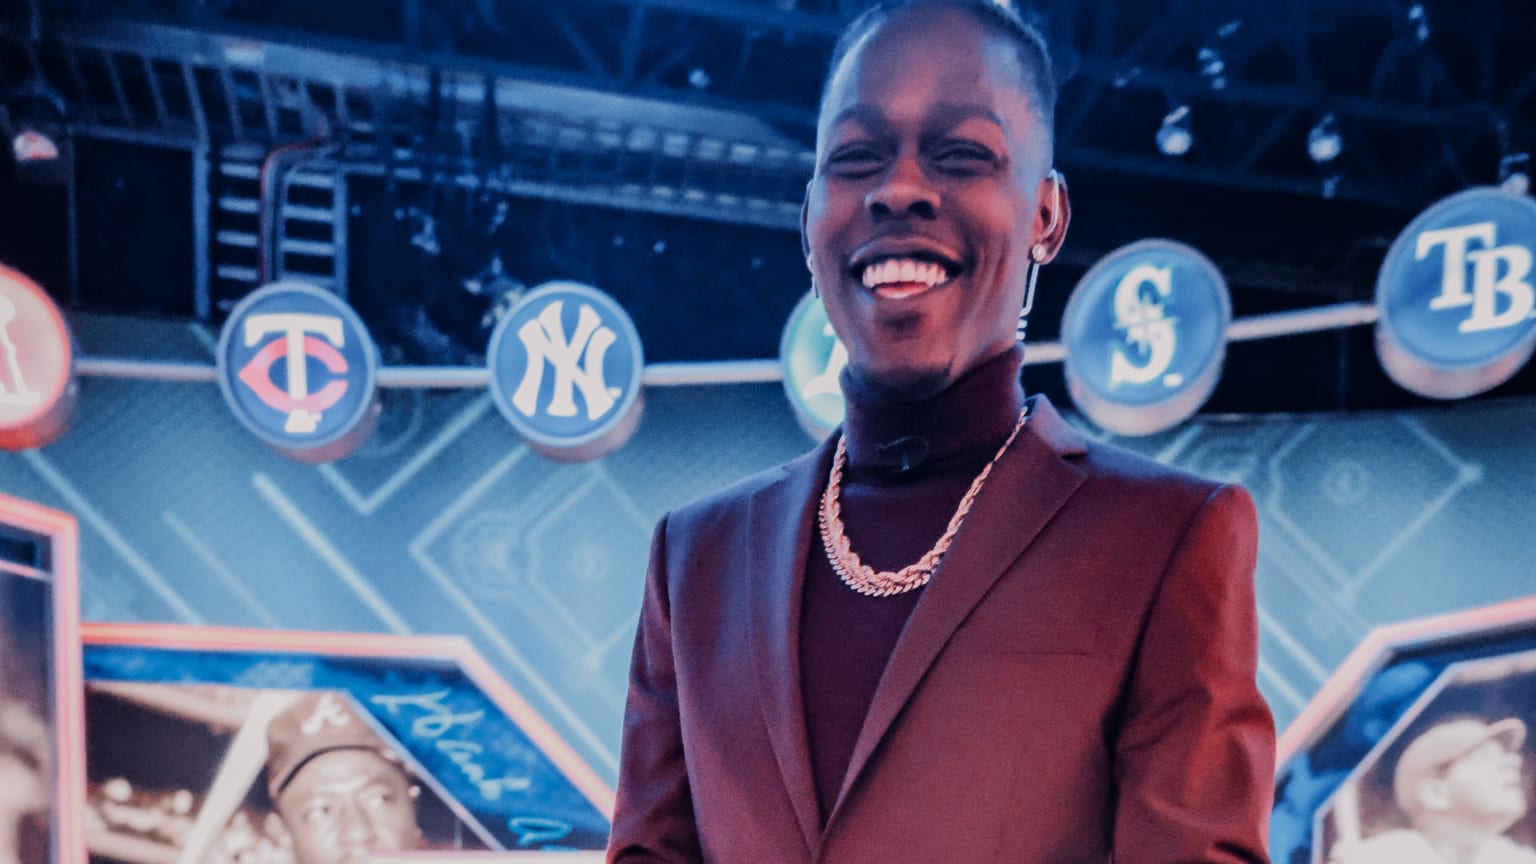 Jazz Chisholm Jr. smiles on an MLB Network set, wearing a burgundy suit